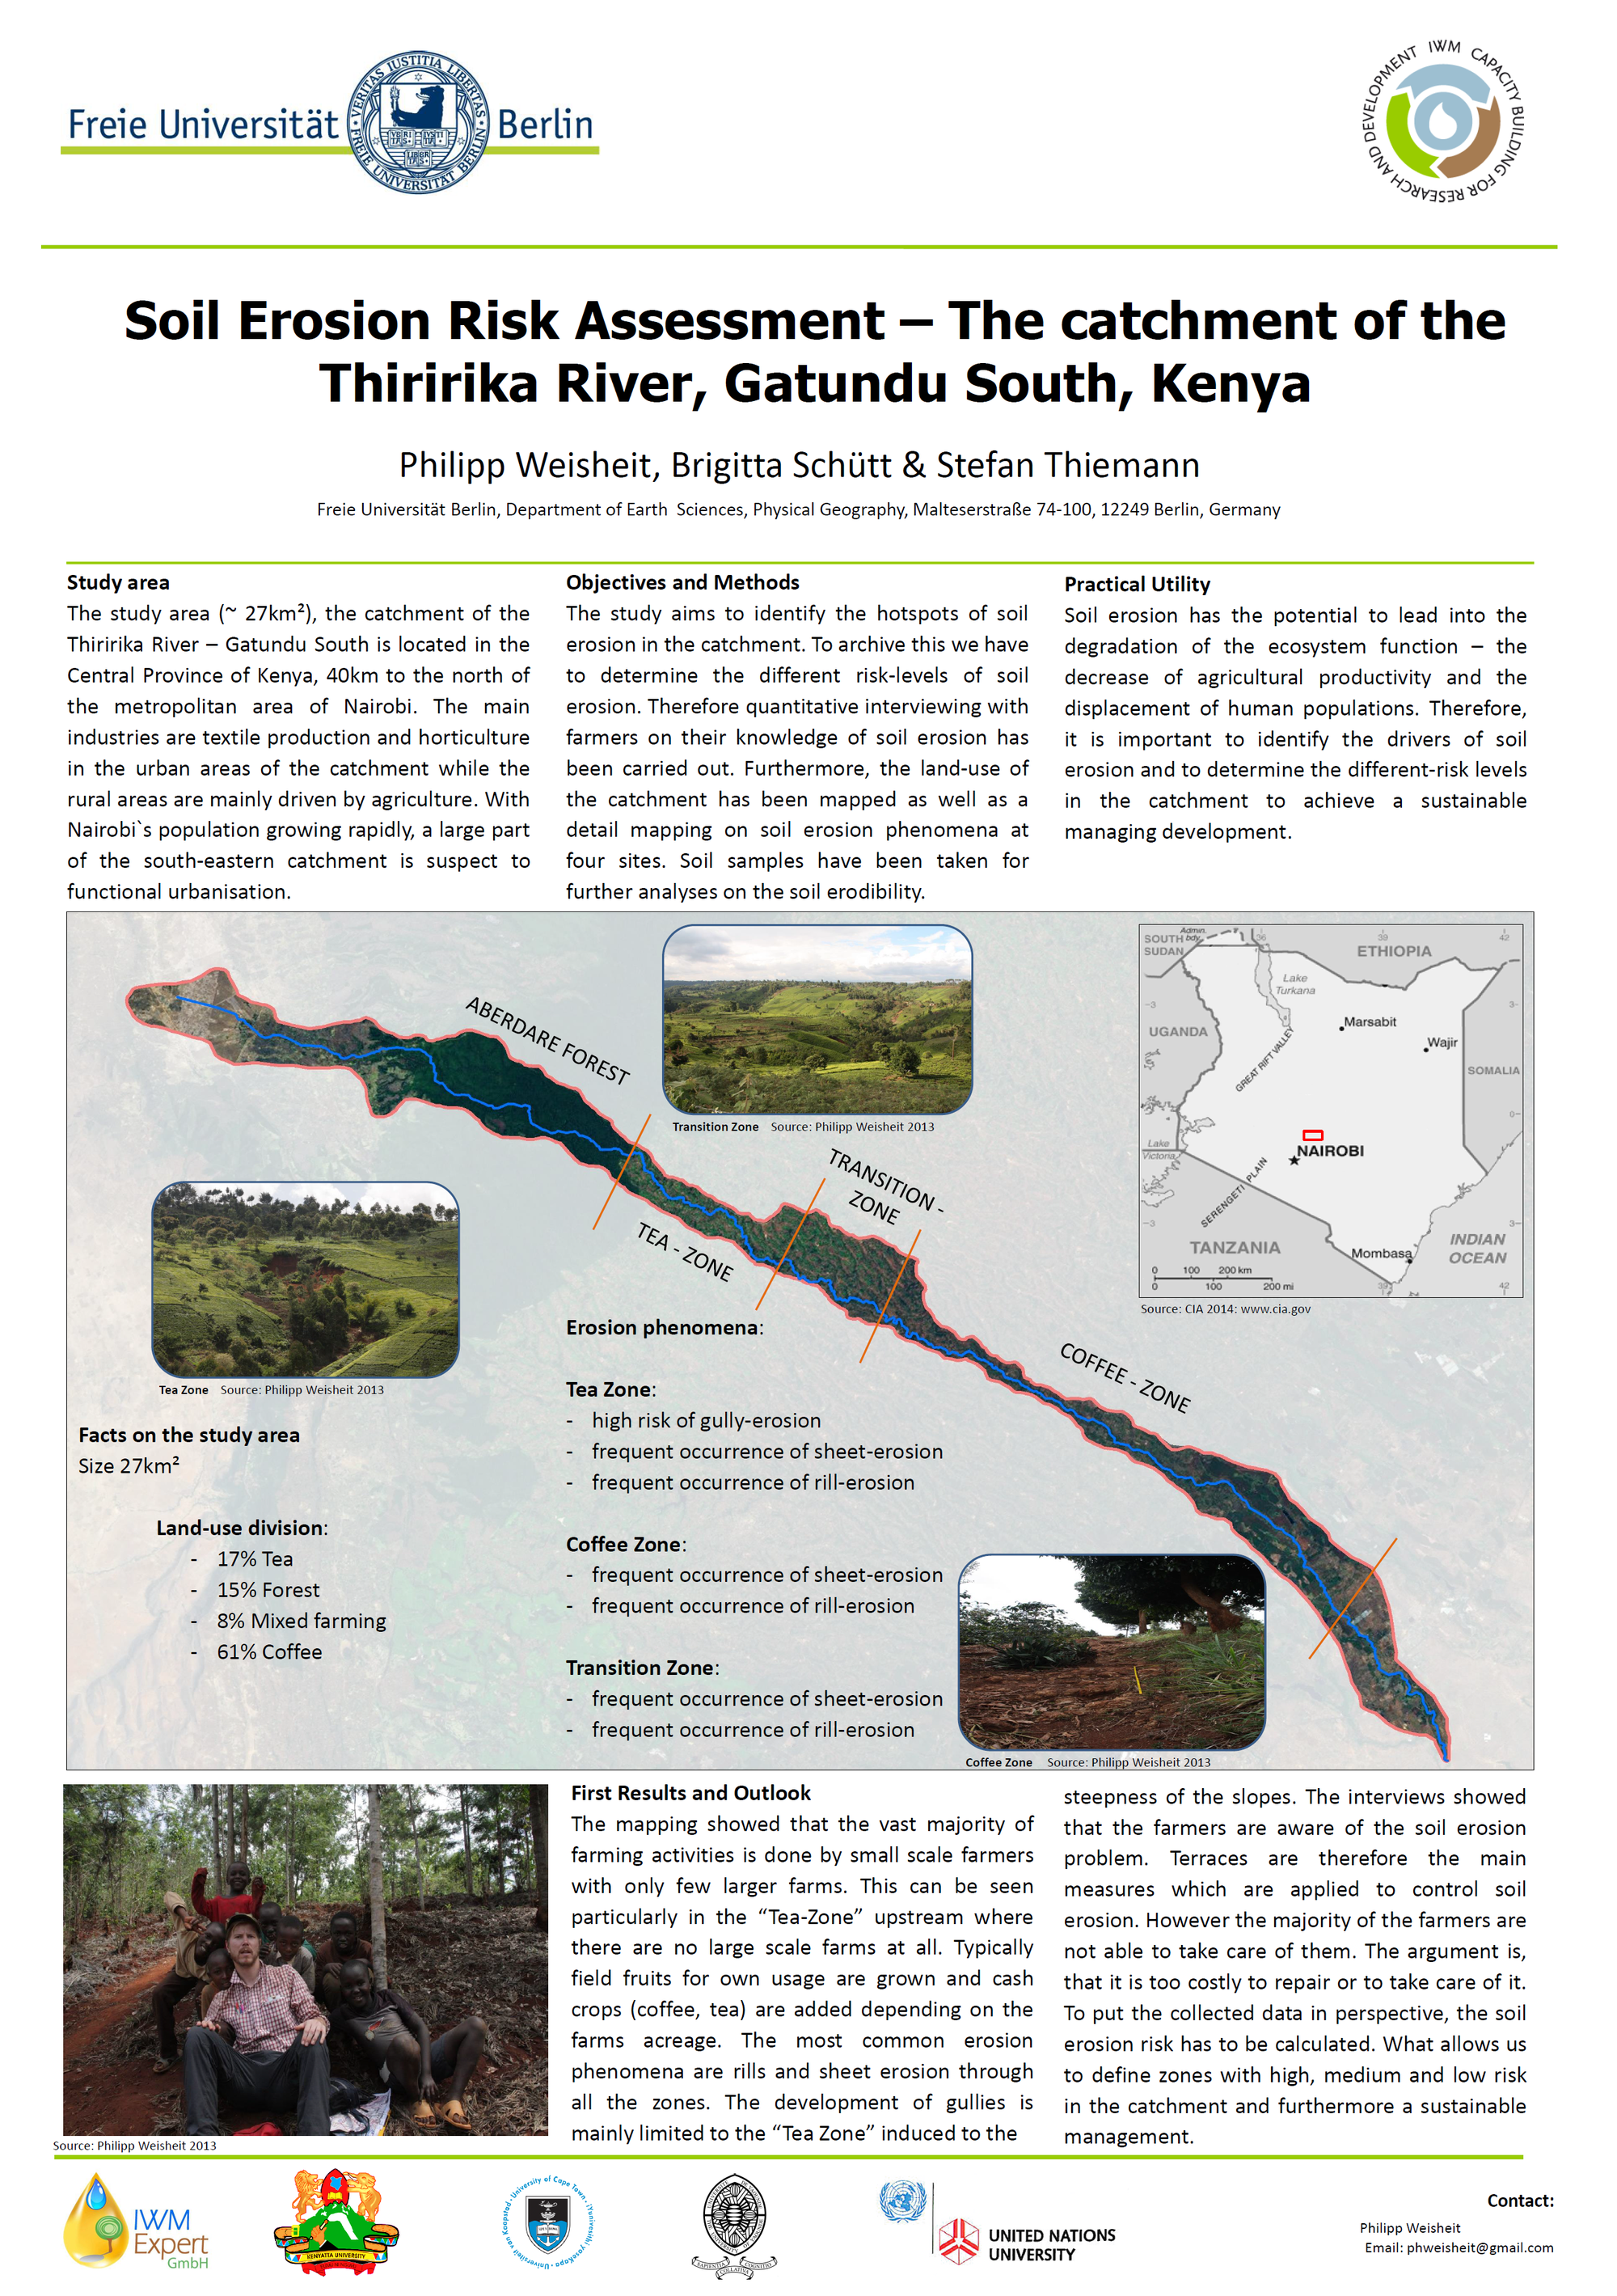 Philipp Weisheit (2014): Soil erosion risk assessment - the catchment of the Thiririka river, Gatundu South, Kenya